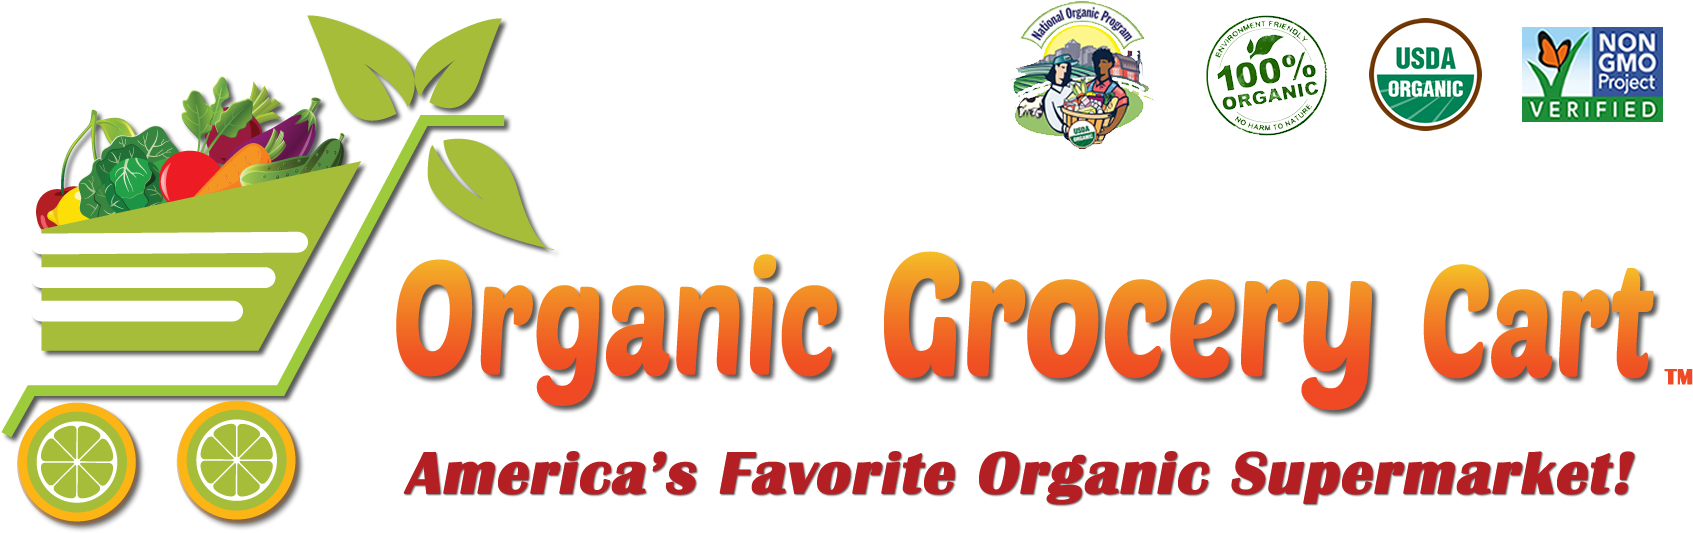 Organic Grocery Cart - Organic Food (1751x555)